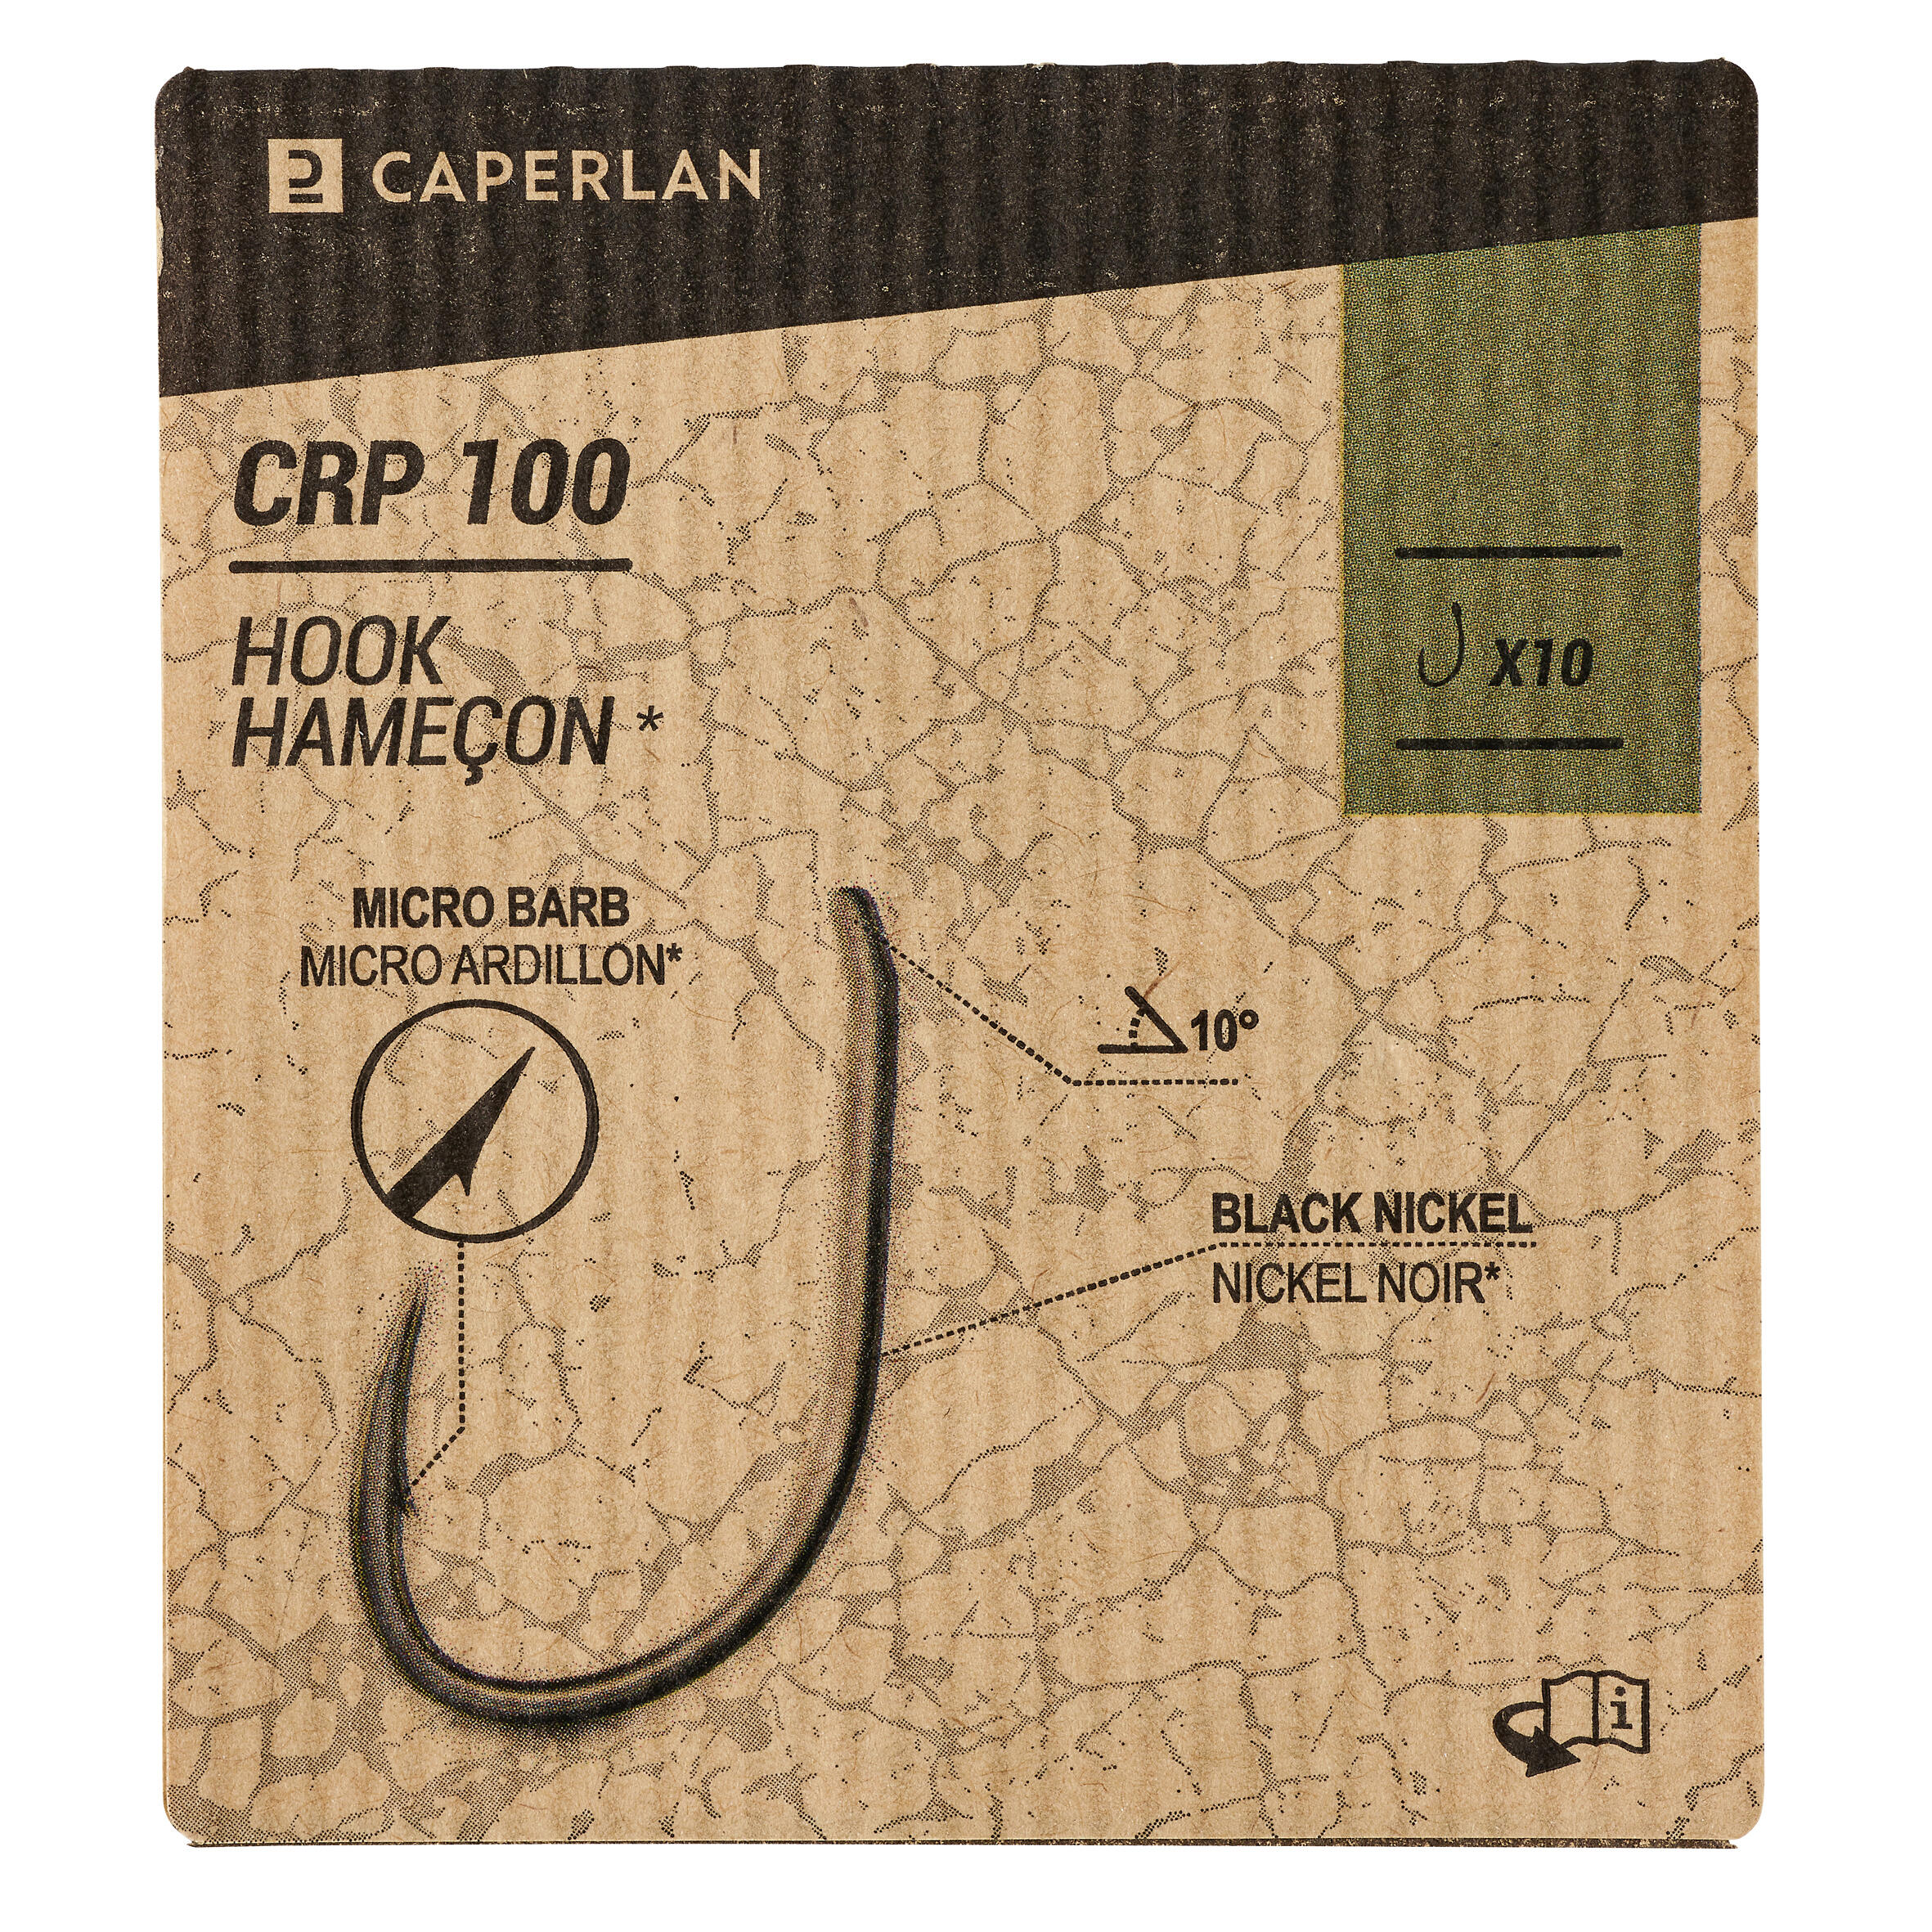 Carp fishing hook 100 3/4